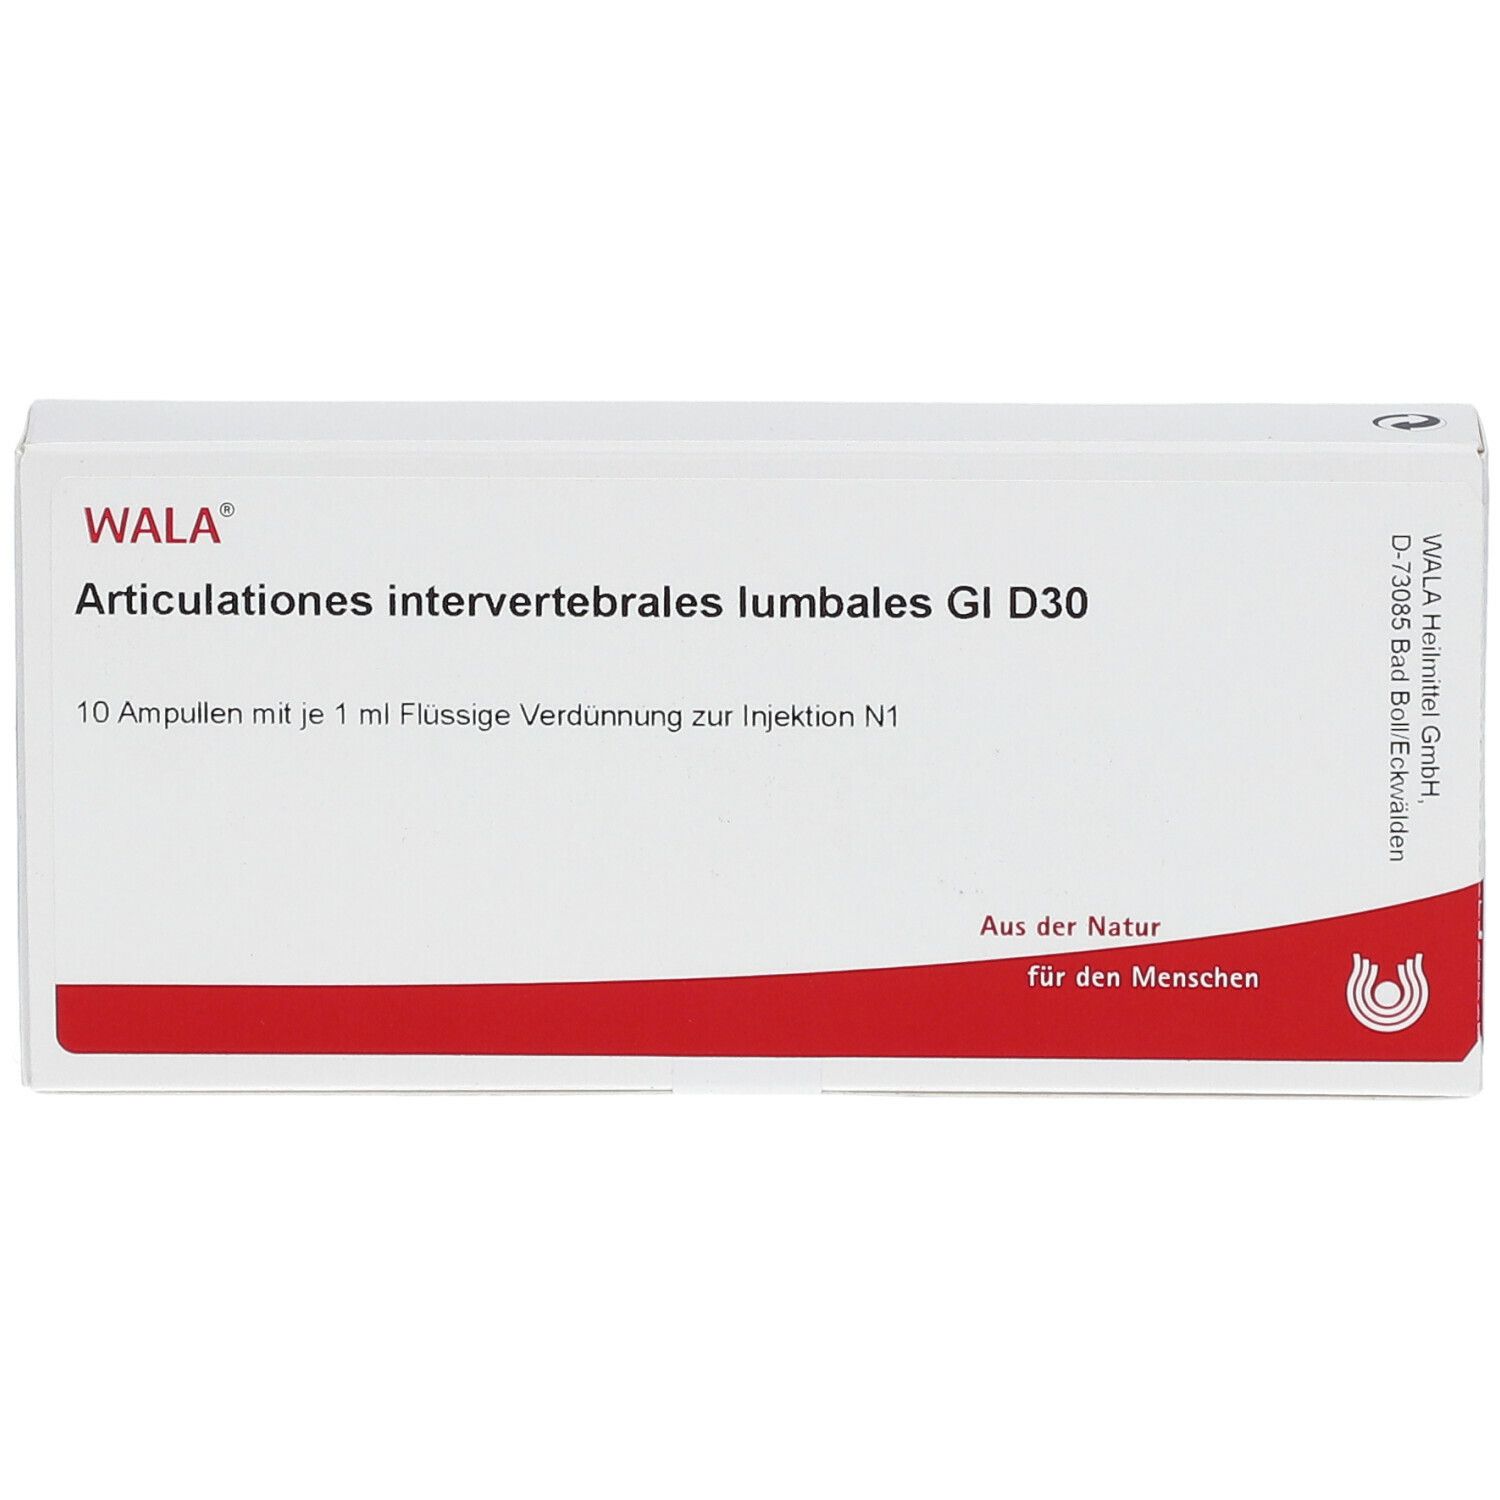 WALA® Articulationes intervertebrales lumbales Gl D 30